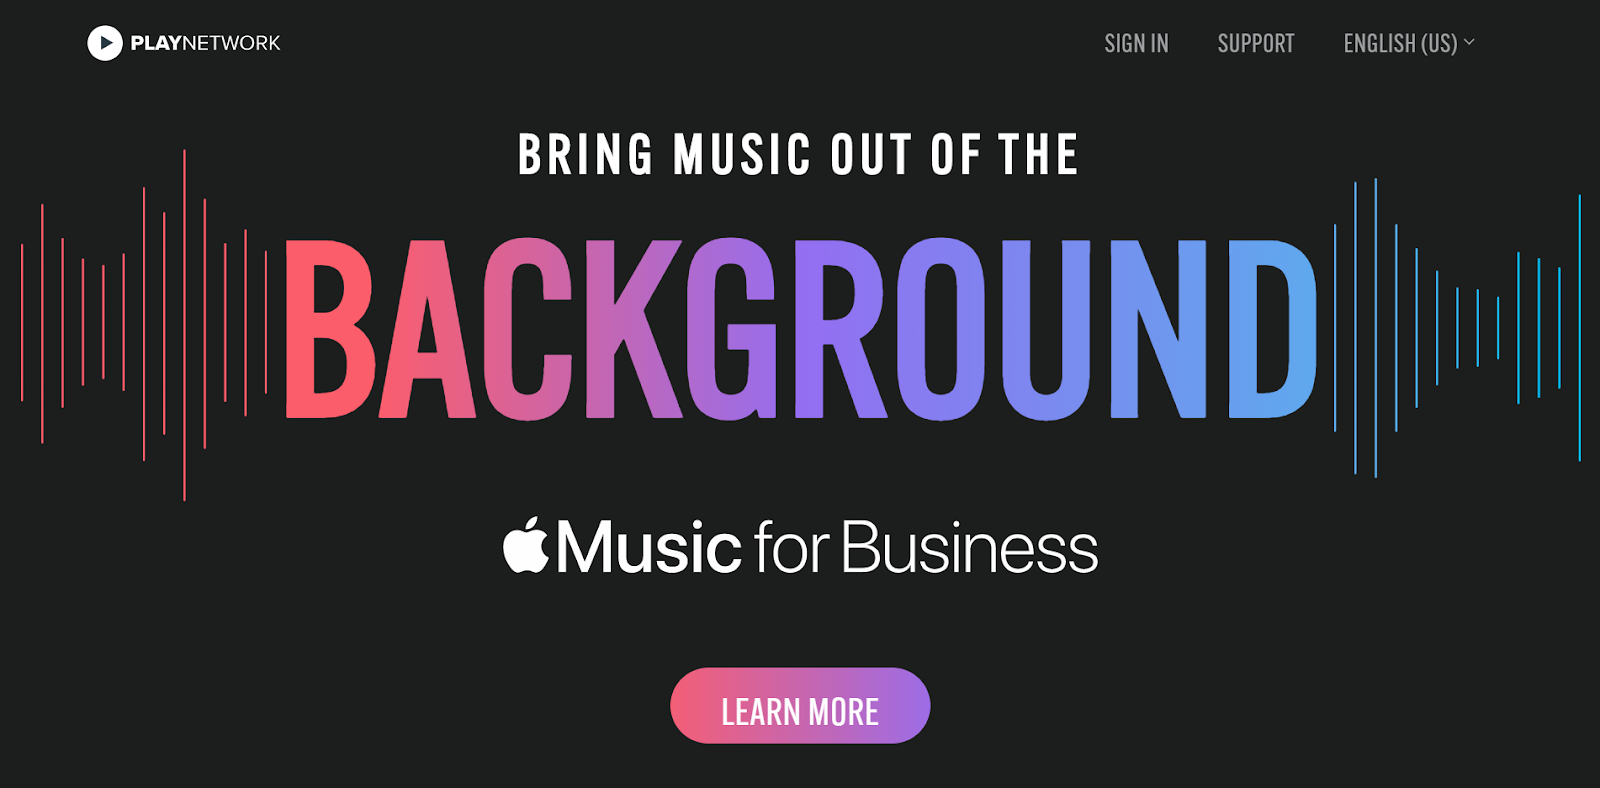 在商店裡合法播音樂！蘋果推出商業版 Apple Music | Apple Music for Business, Apple News, PlayNetwork | iPhone News 愛瘋了